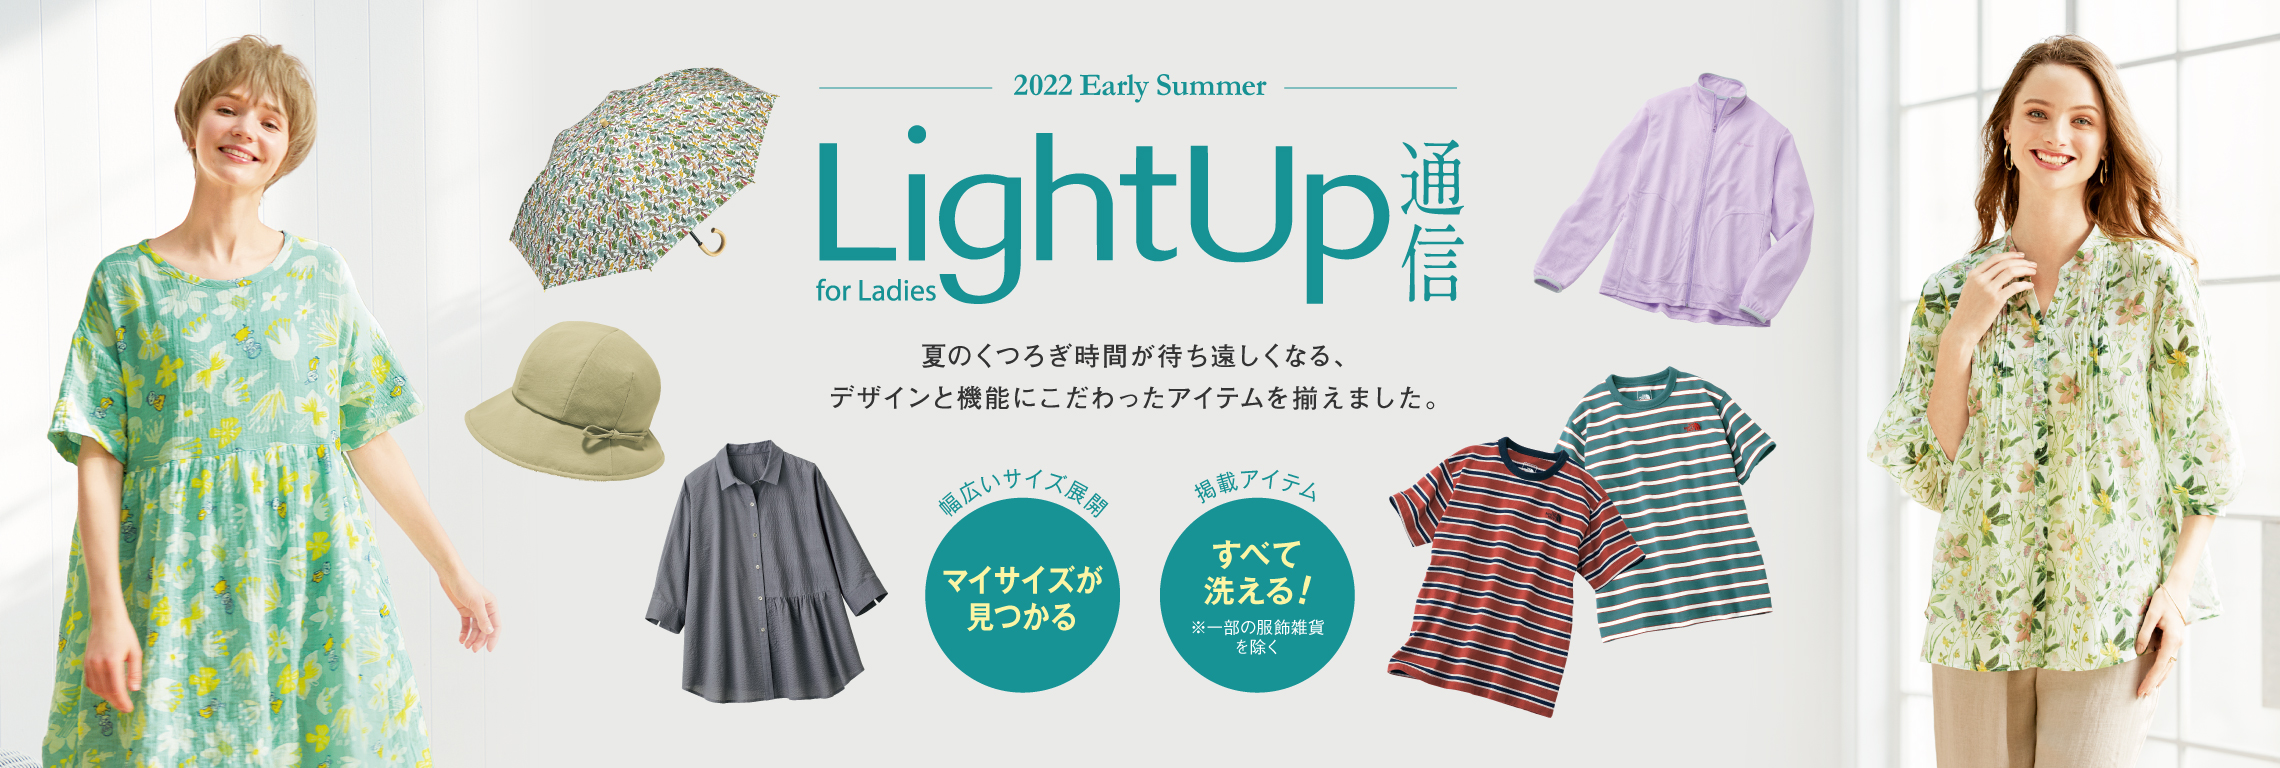 LightUp通信 2022 Early Summer vol.18